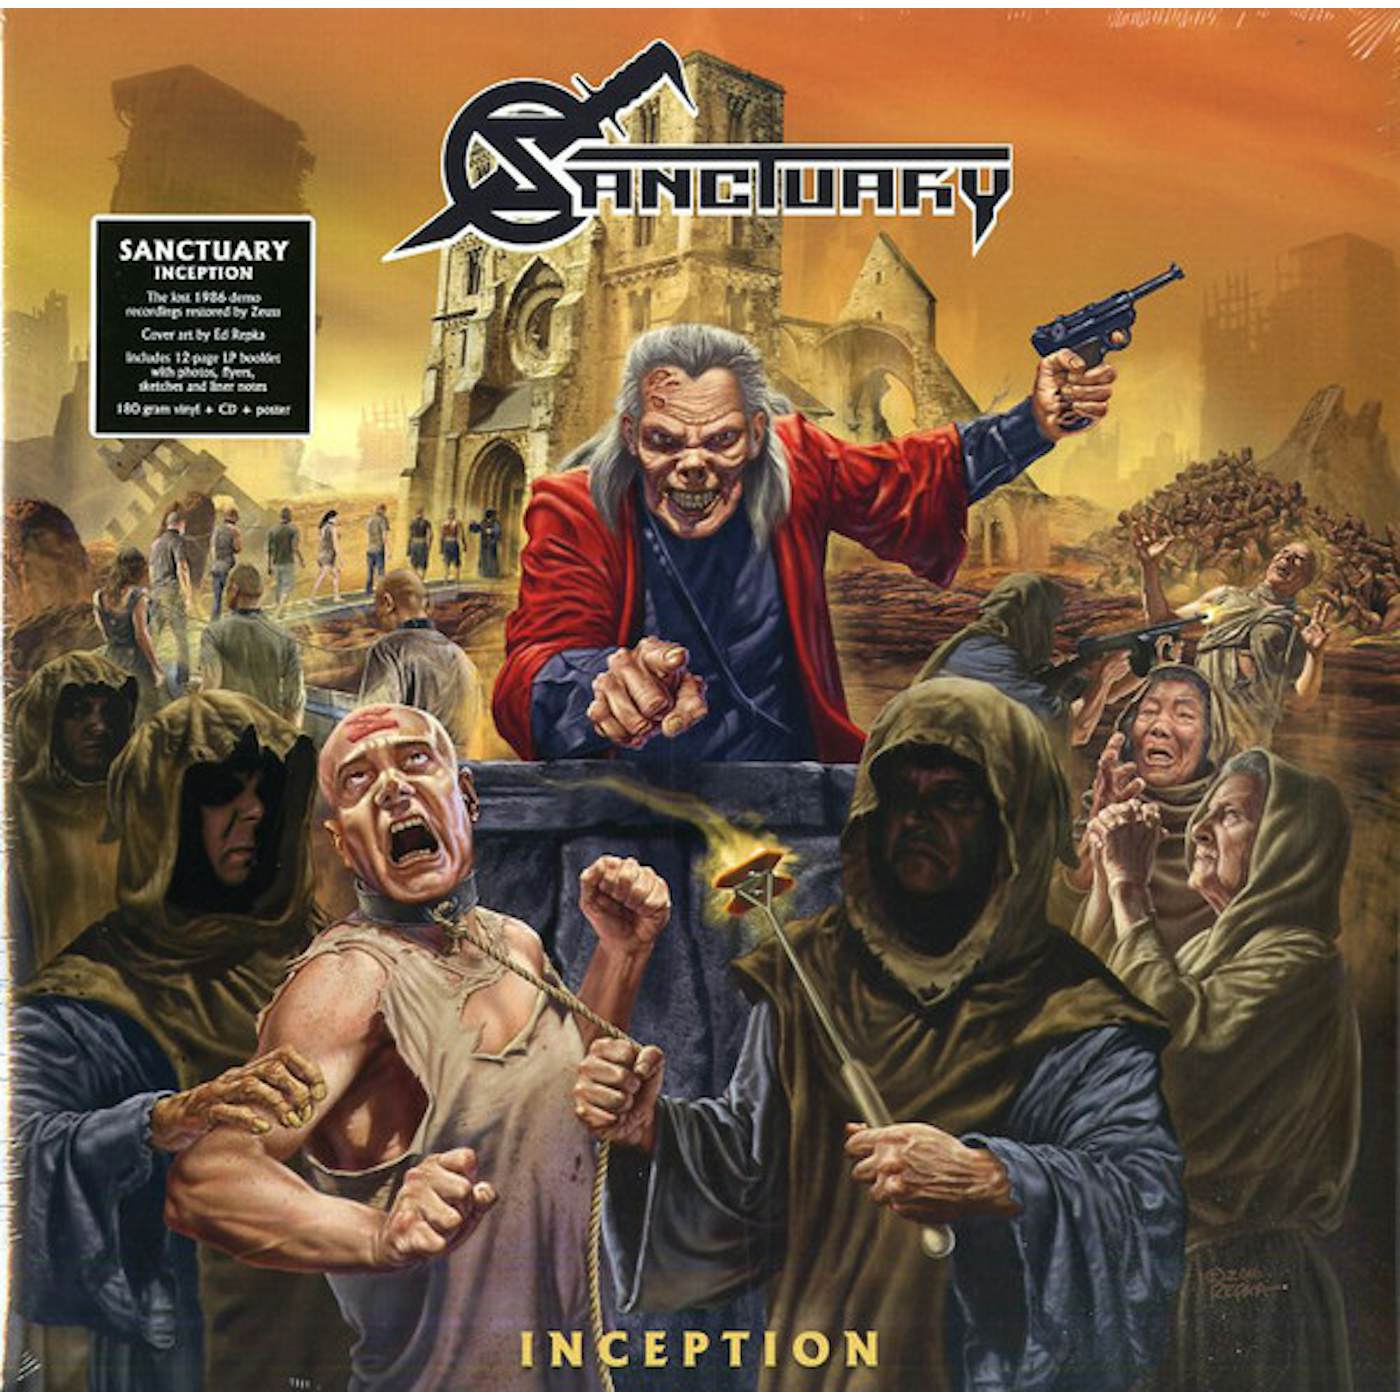 Sanctuary INCEPTION Vinyl Record - Red Vinyl